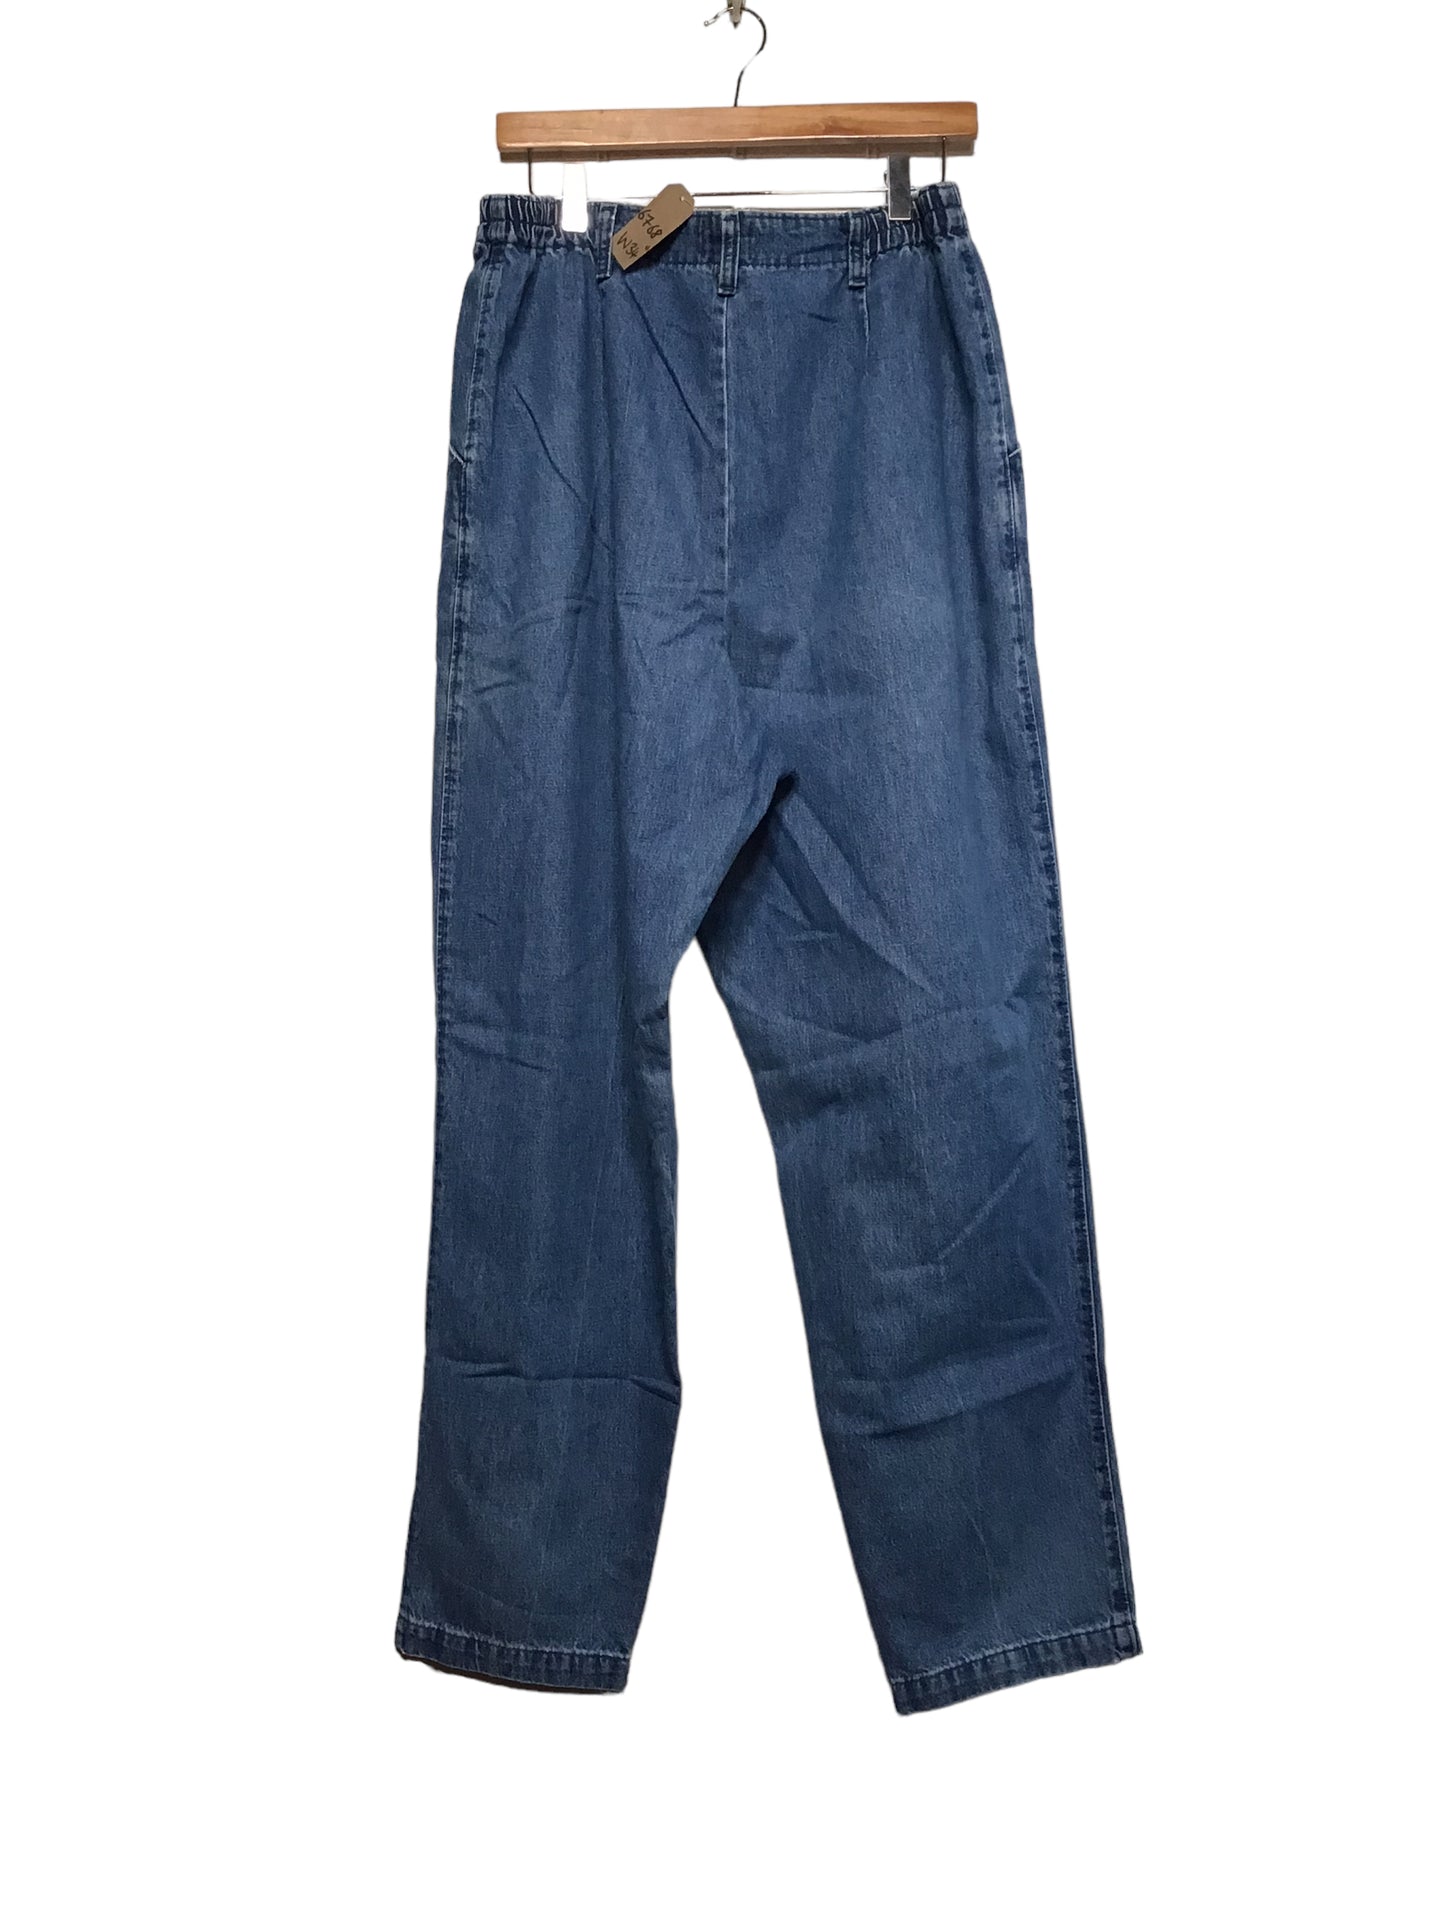 Lee Elasticated Waist Jeans (34x32)